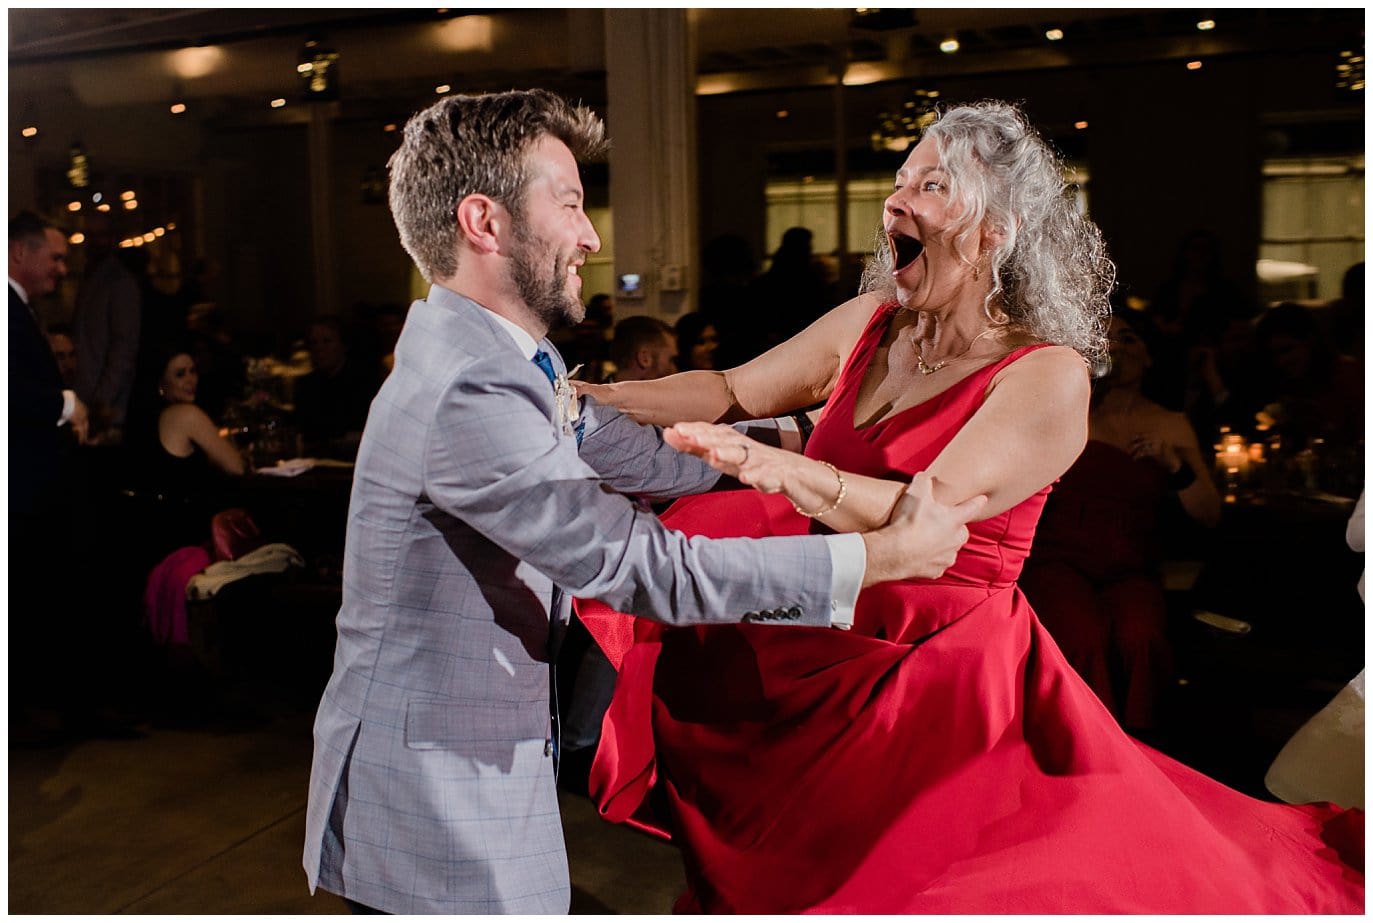 groom dancing at Denver wedding reception by blanc wedding photographer Jennie Crate